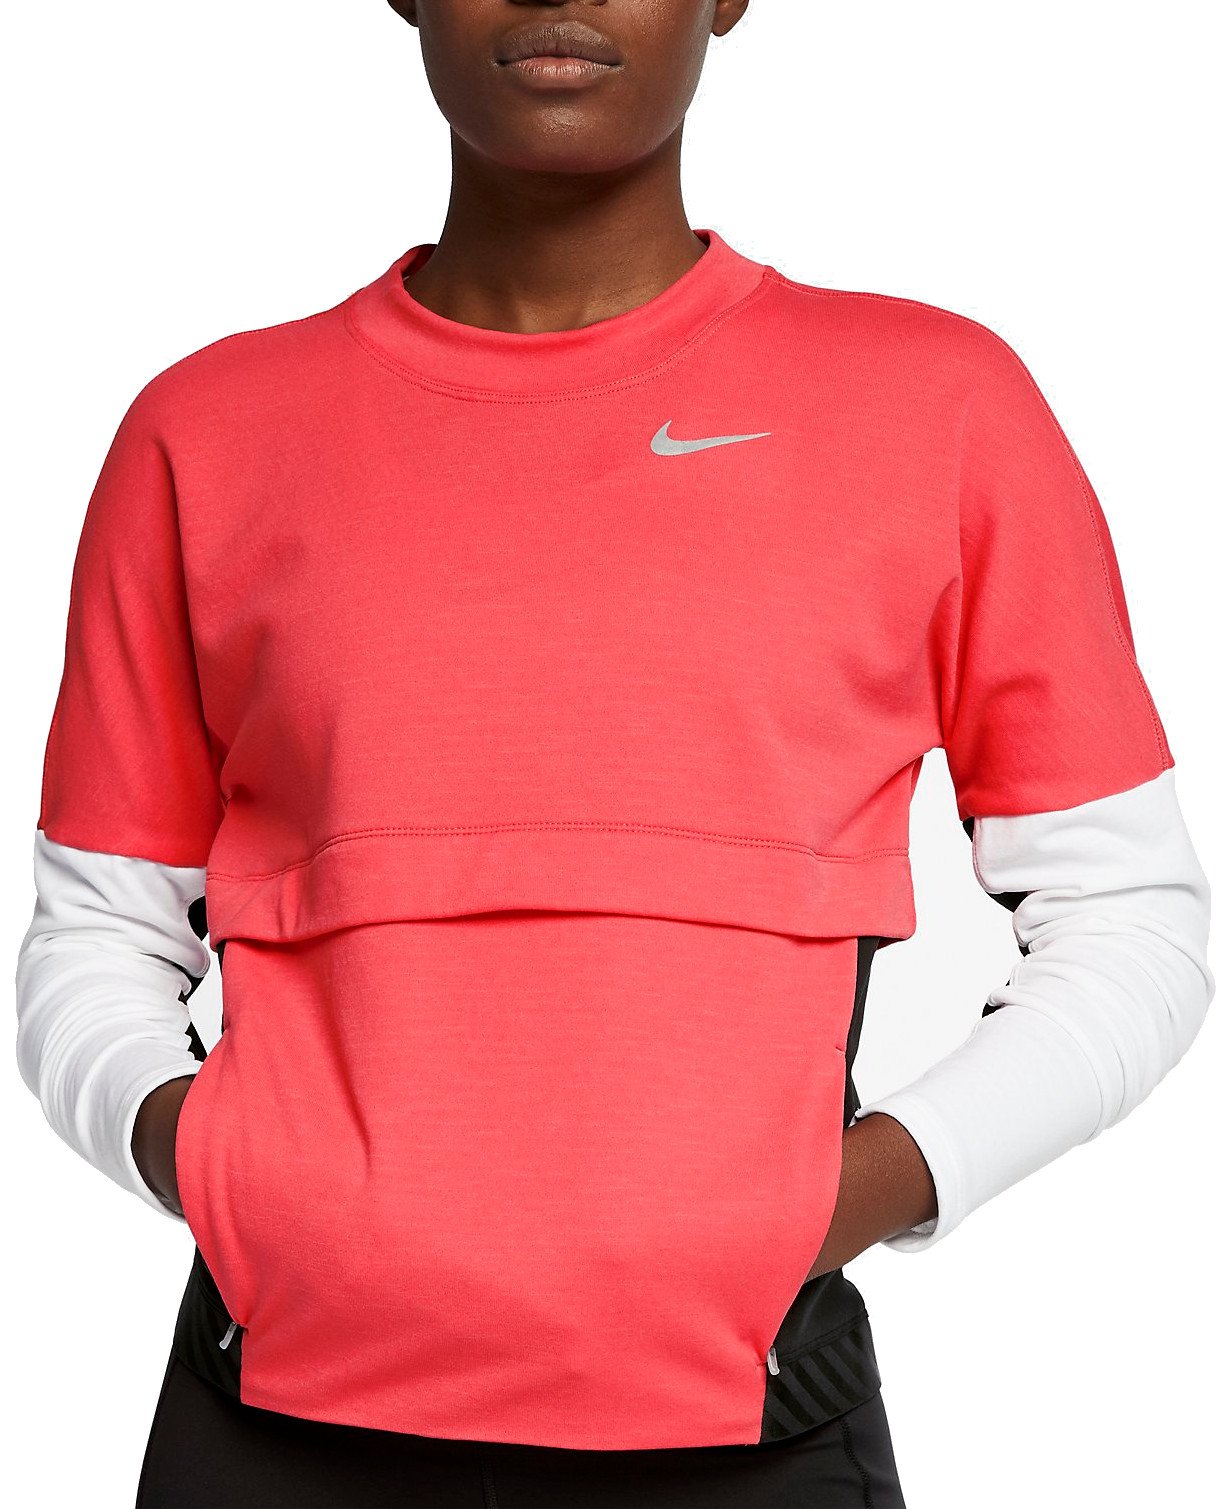 Dámské běžecké tričko s dlouhým rukávem Nike Therma Sphere